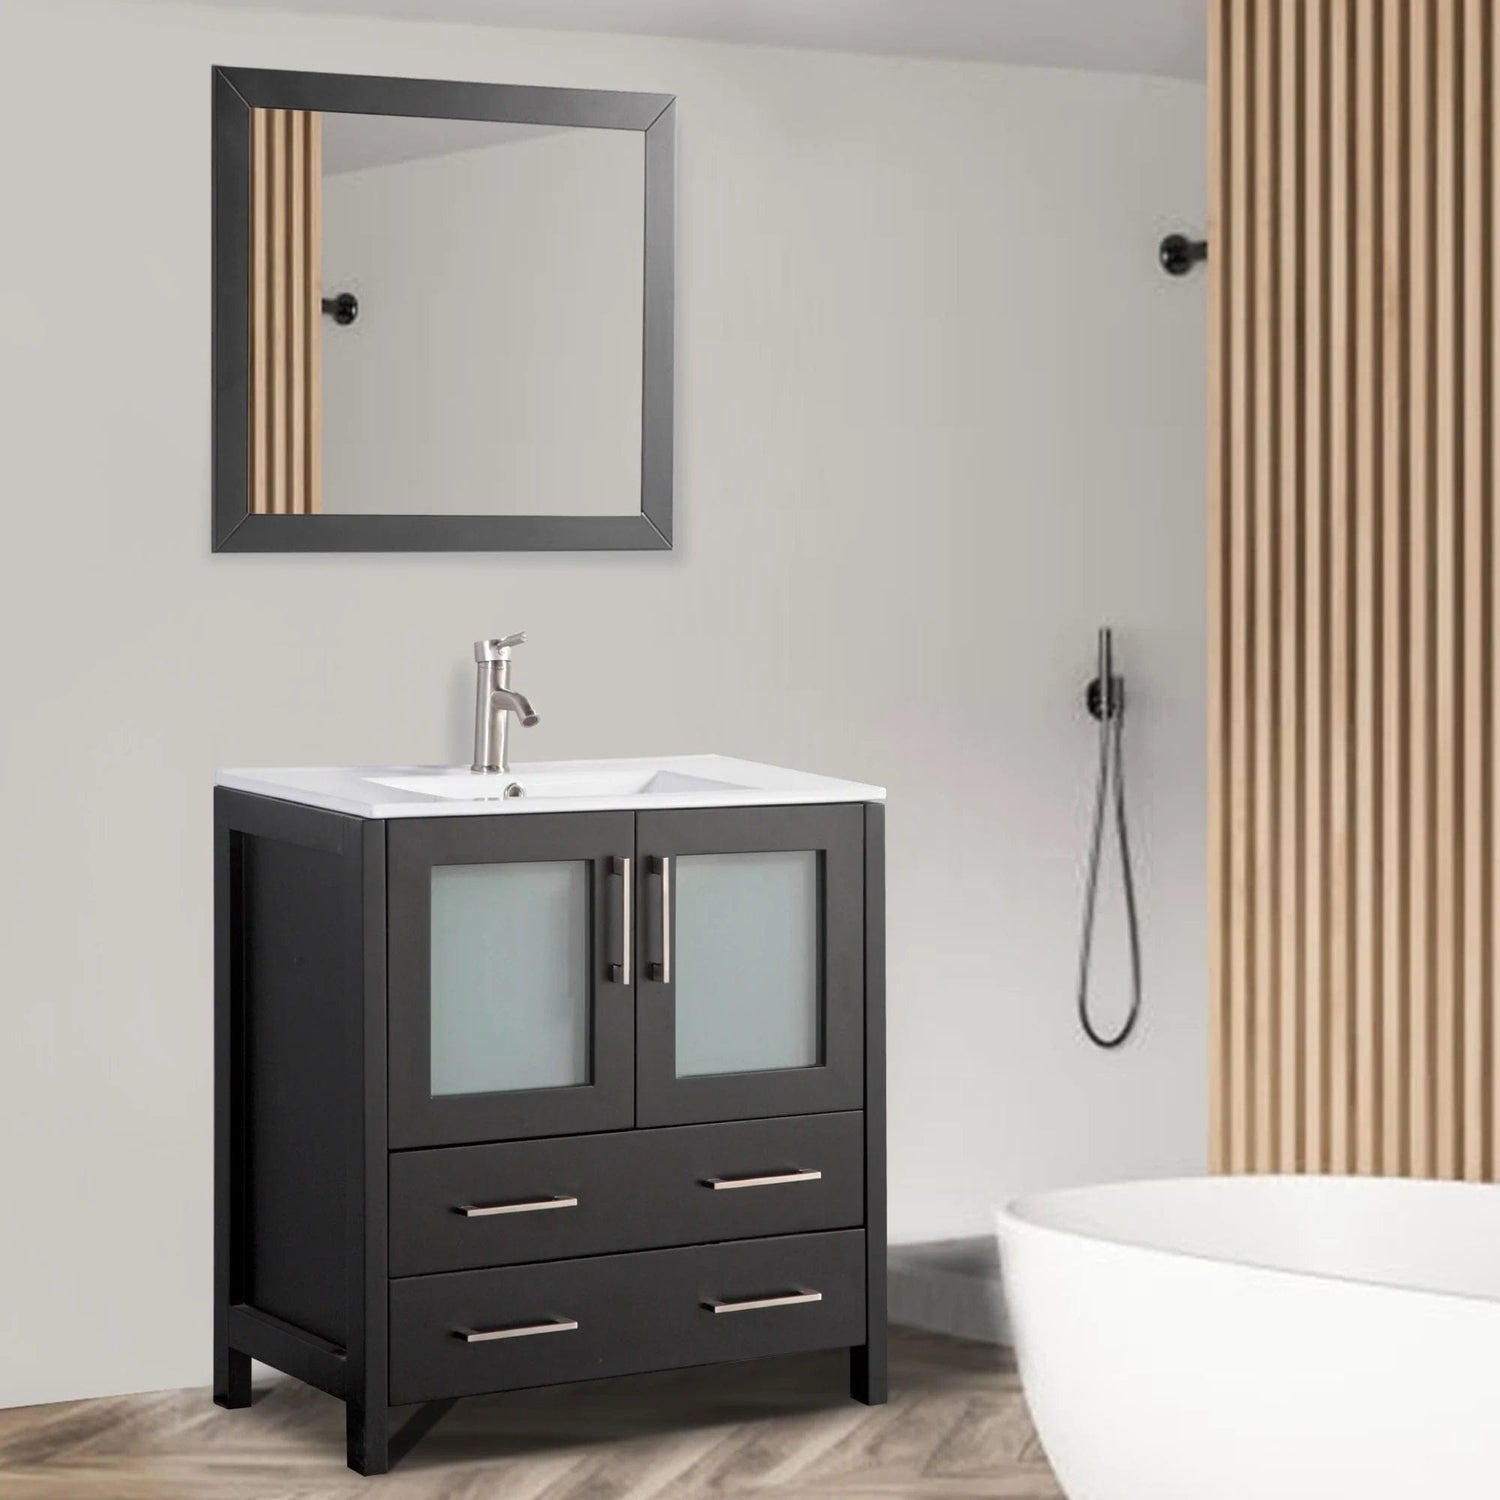 24 in. Single Sink Bathroom Vanity Compact Set in Espresso - Decohub Home